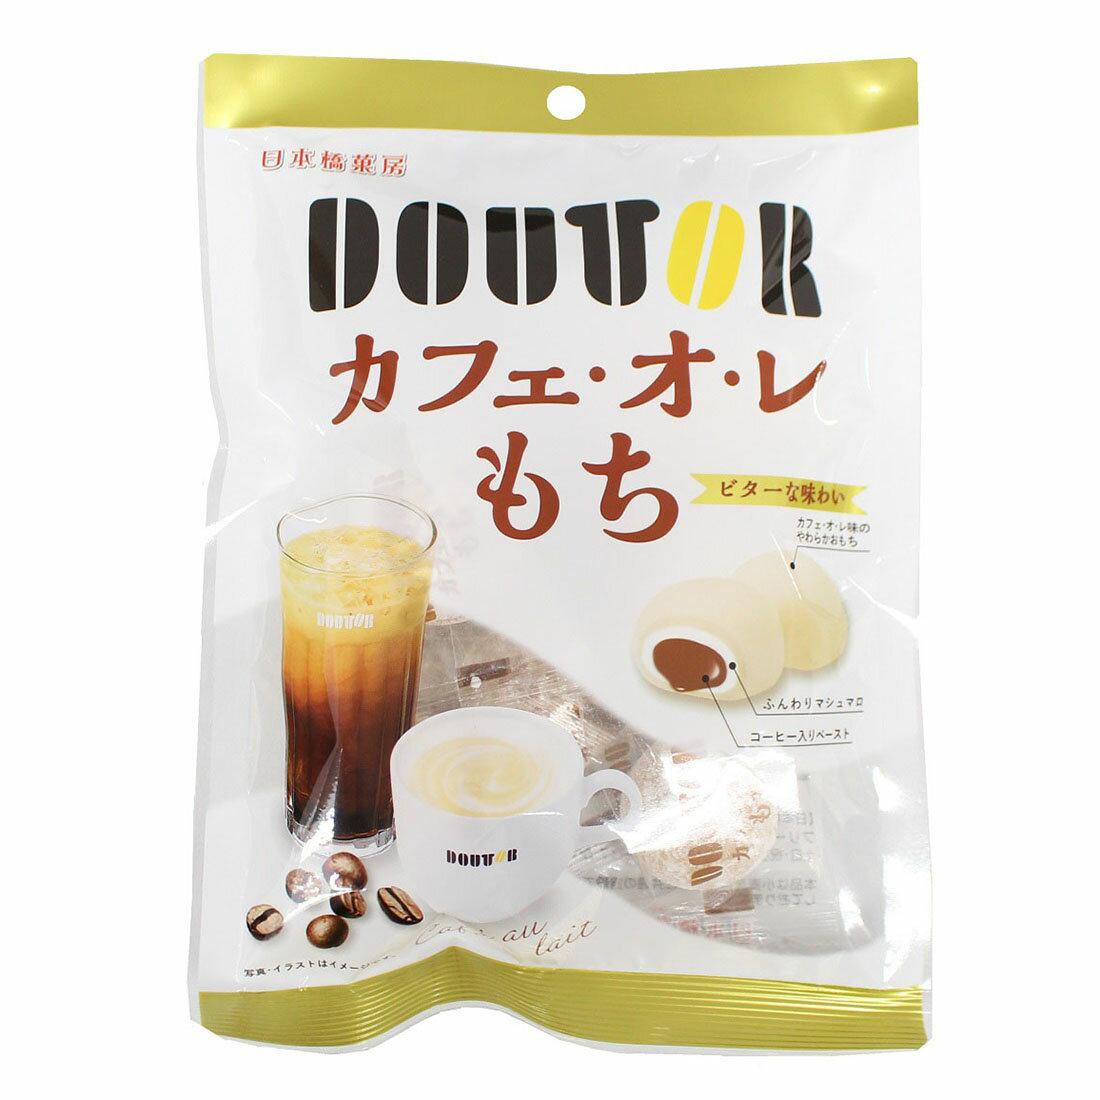 Nihonbashi Kabou Japanese Coffee Mochi Snack Doutor Cafe Au Lait Flavor 91g (Pack of 5)